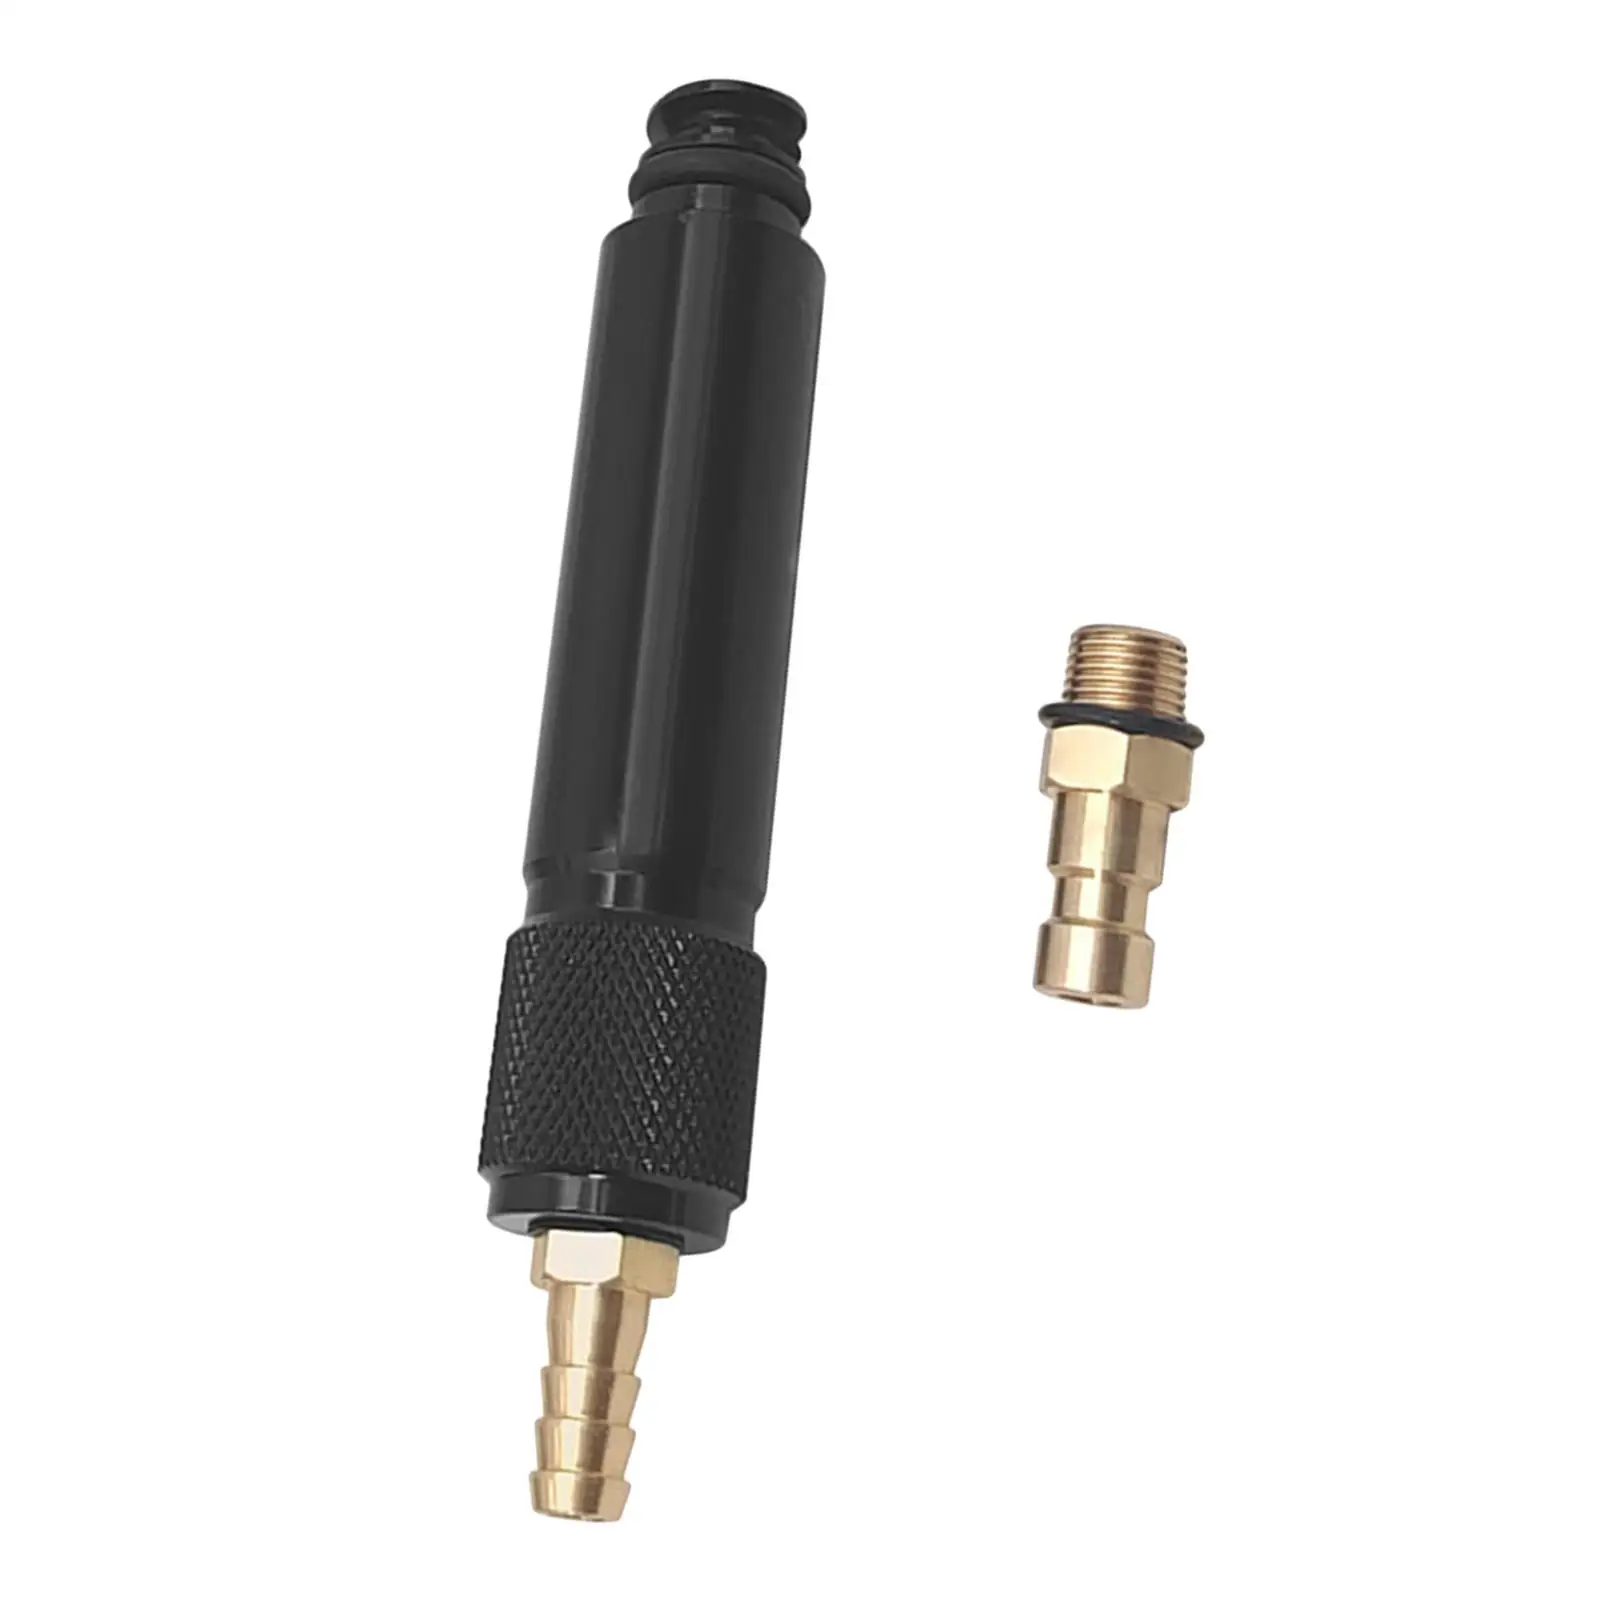 Auto Transmition Oil Filling Adapter Vas6617/12 Tool Direct Replaces Premium